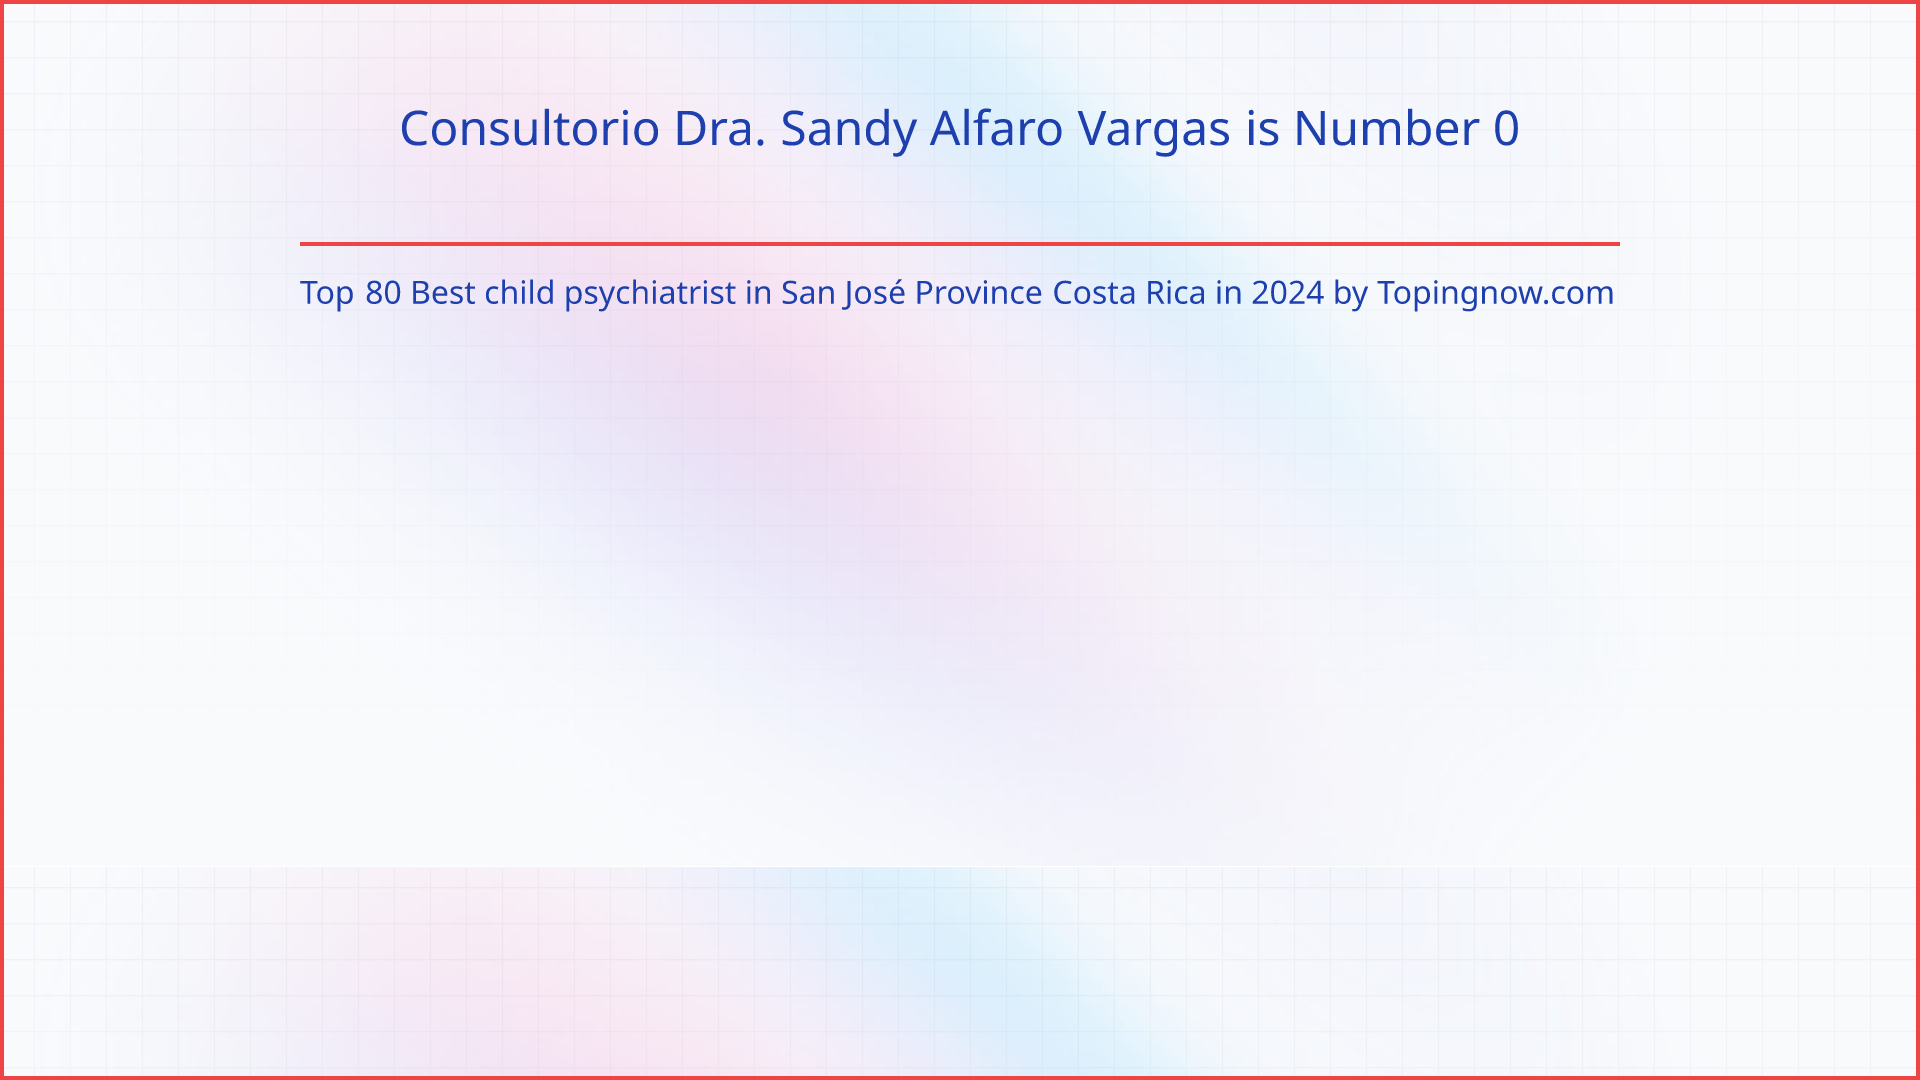 Consultorio Dra. Sandy Alfaro Vargas: Top 80 Best child psychiatrist in San José Province Costa Rica in 2024